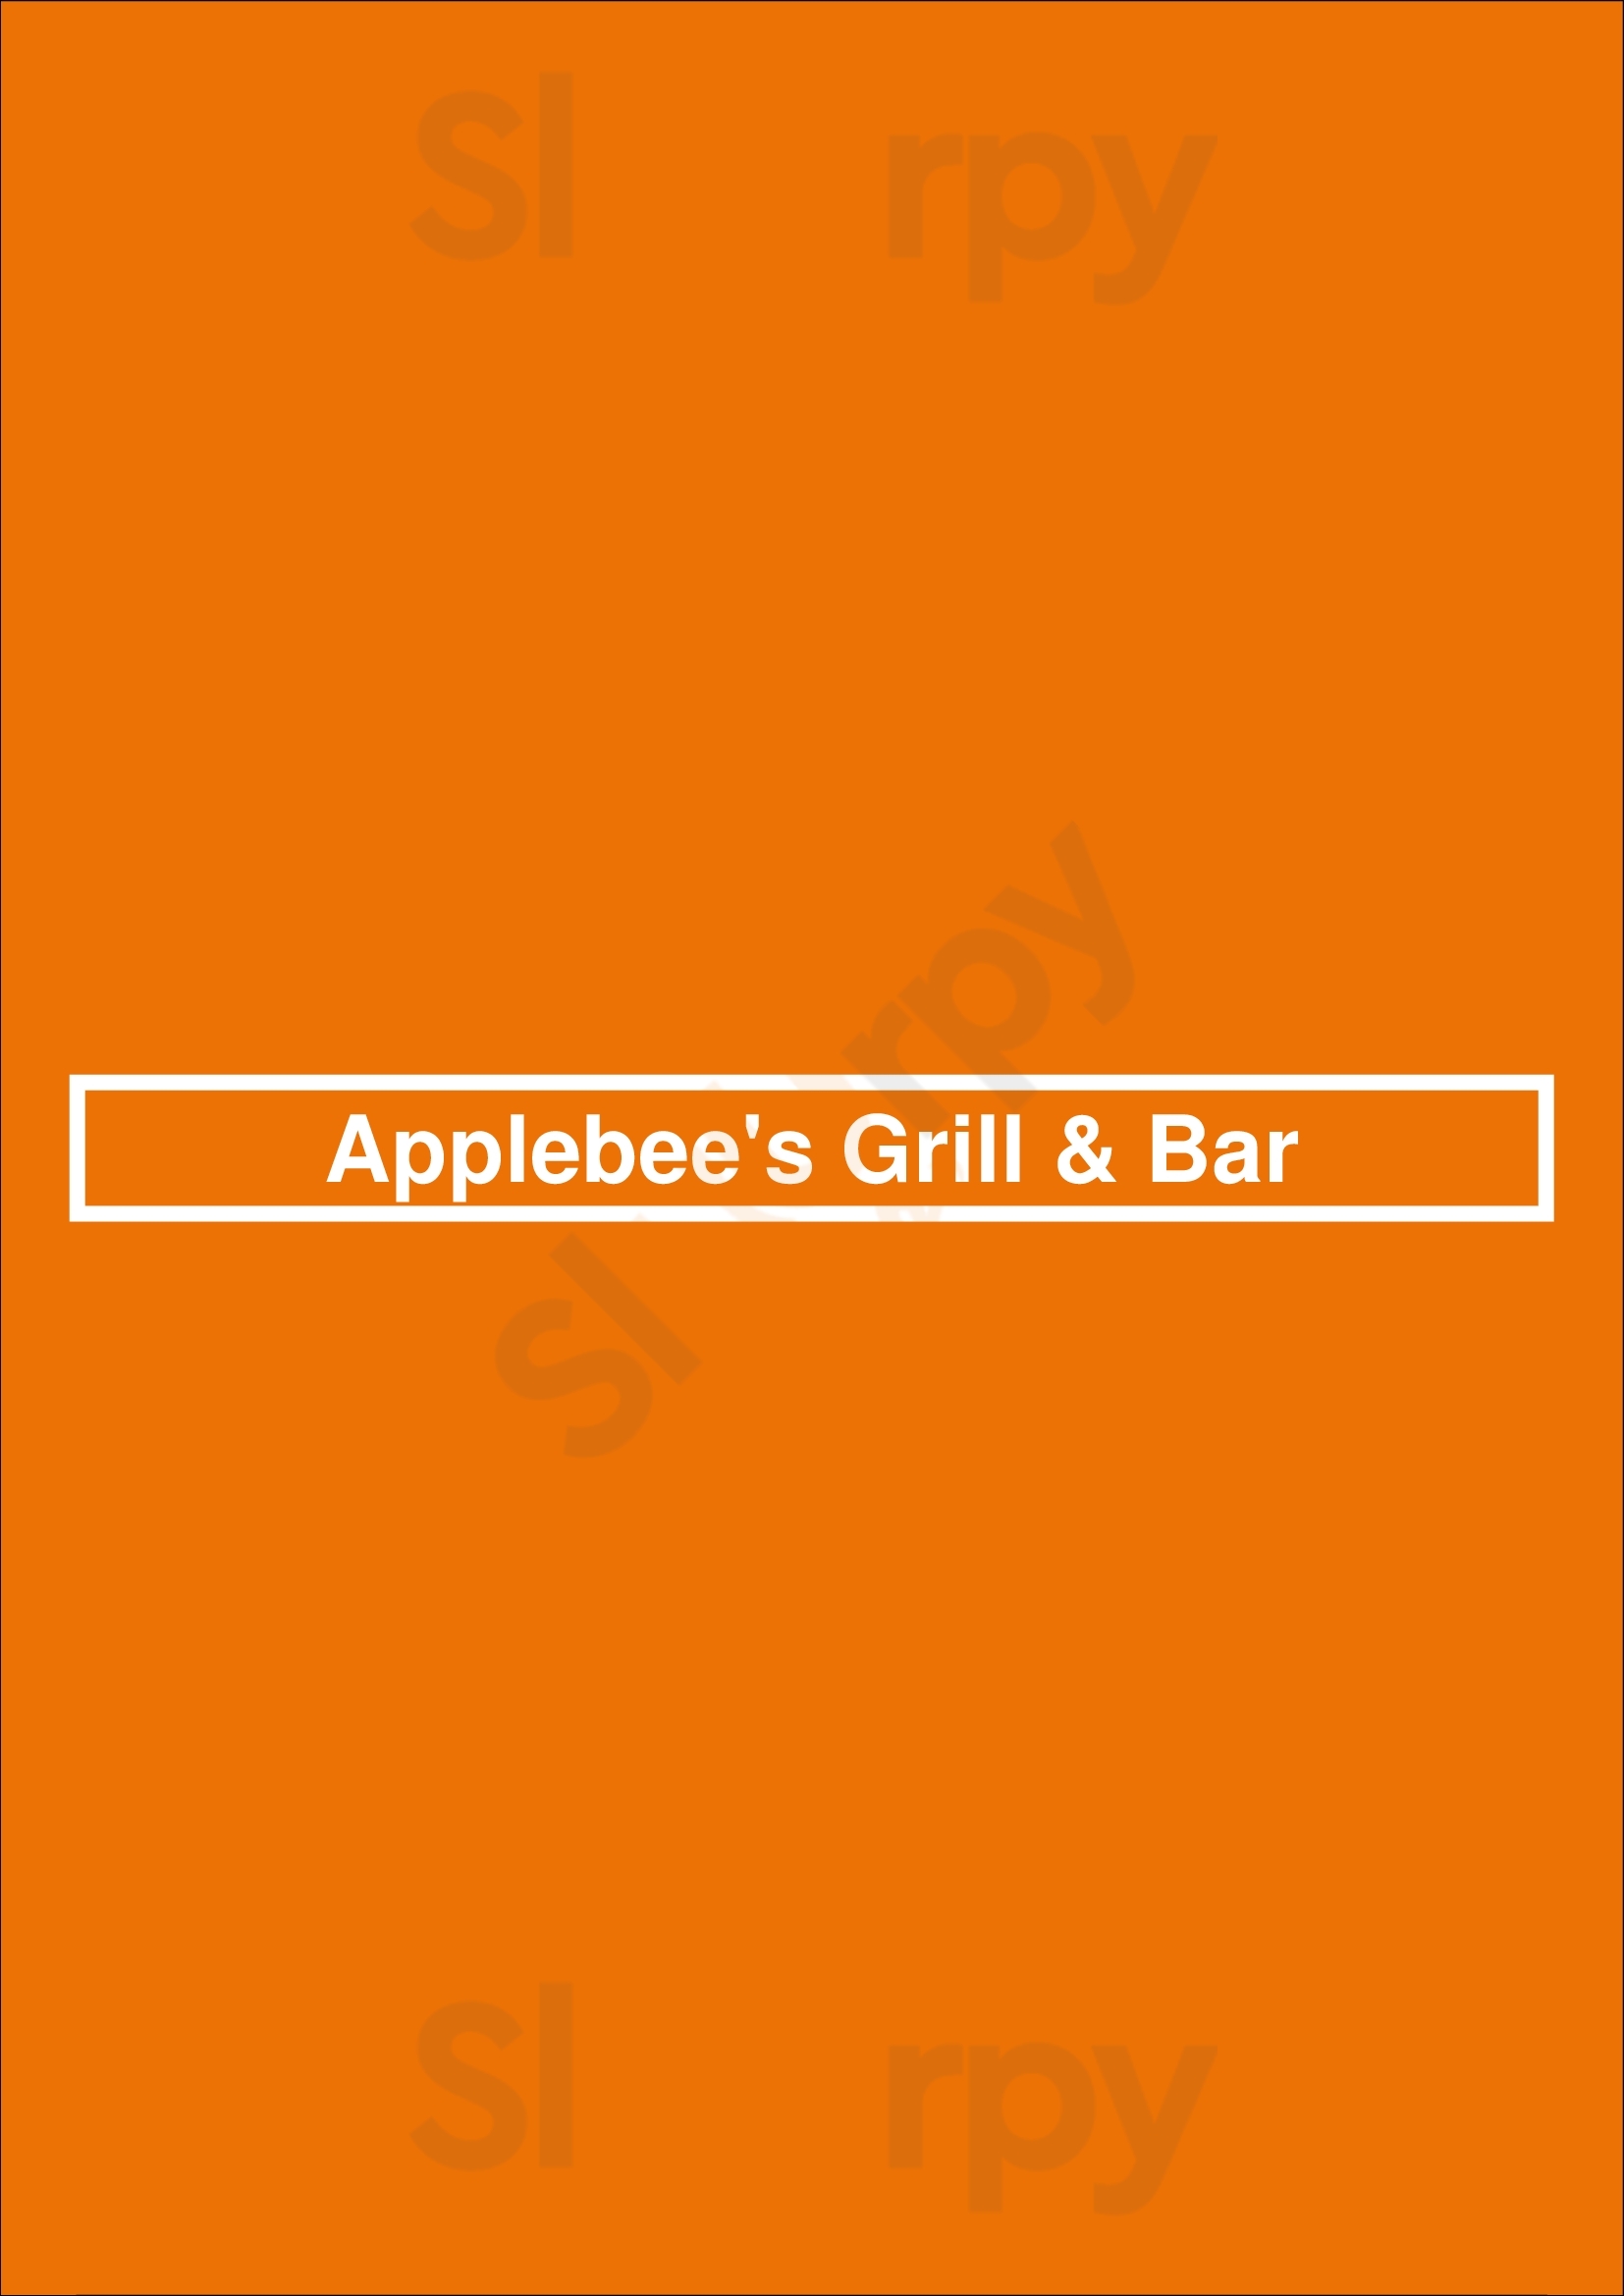 Applebee's Grill & Bar Bronx Menu - 1